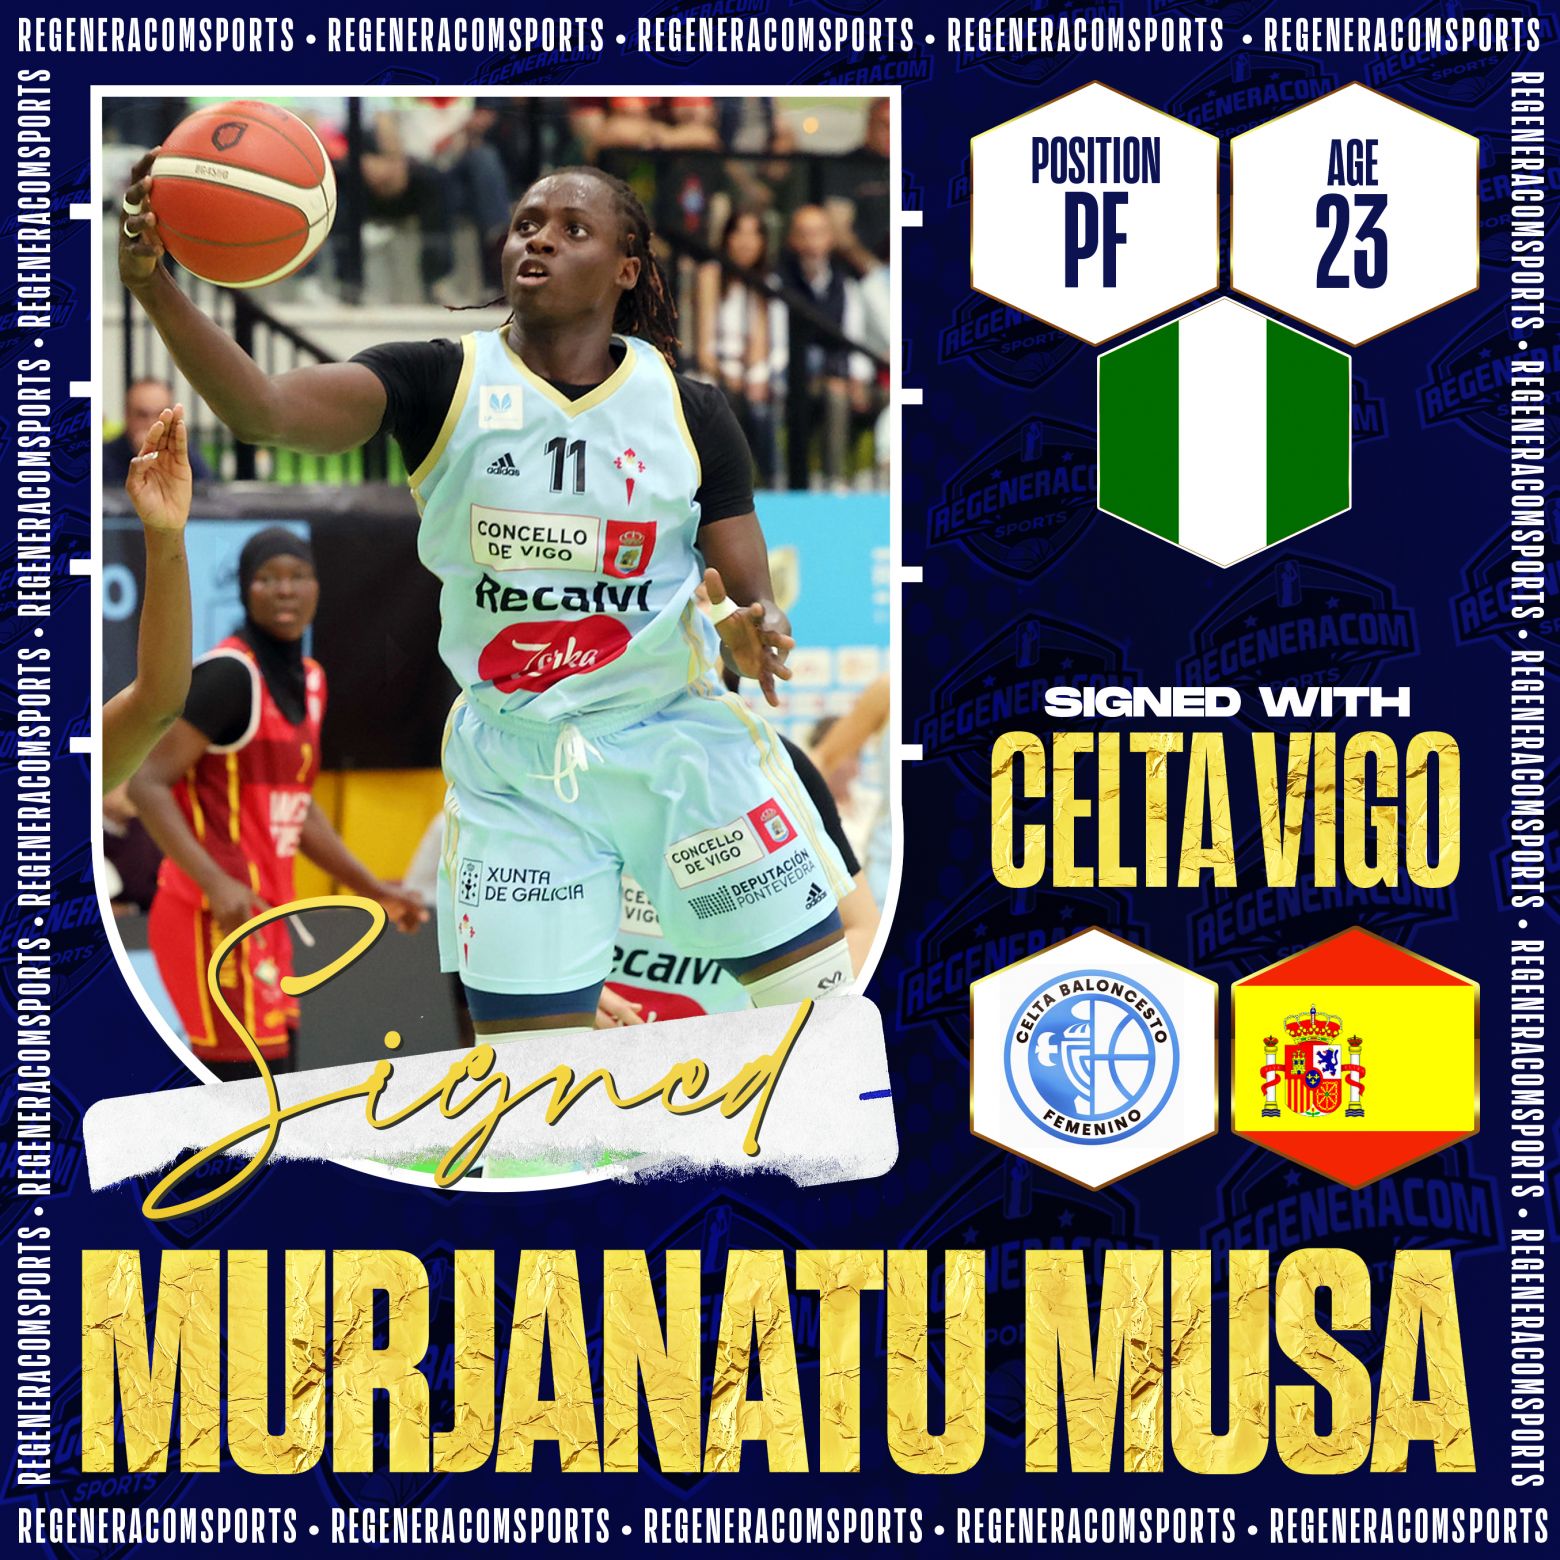 MURJANATU MUSA has re-signed with Celta Vigo for the 2023/24 season